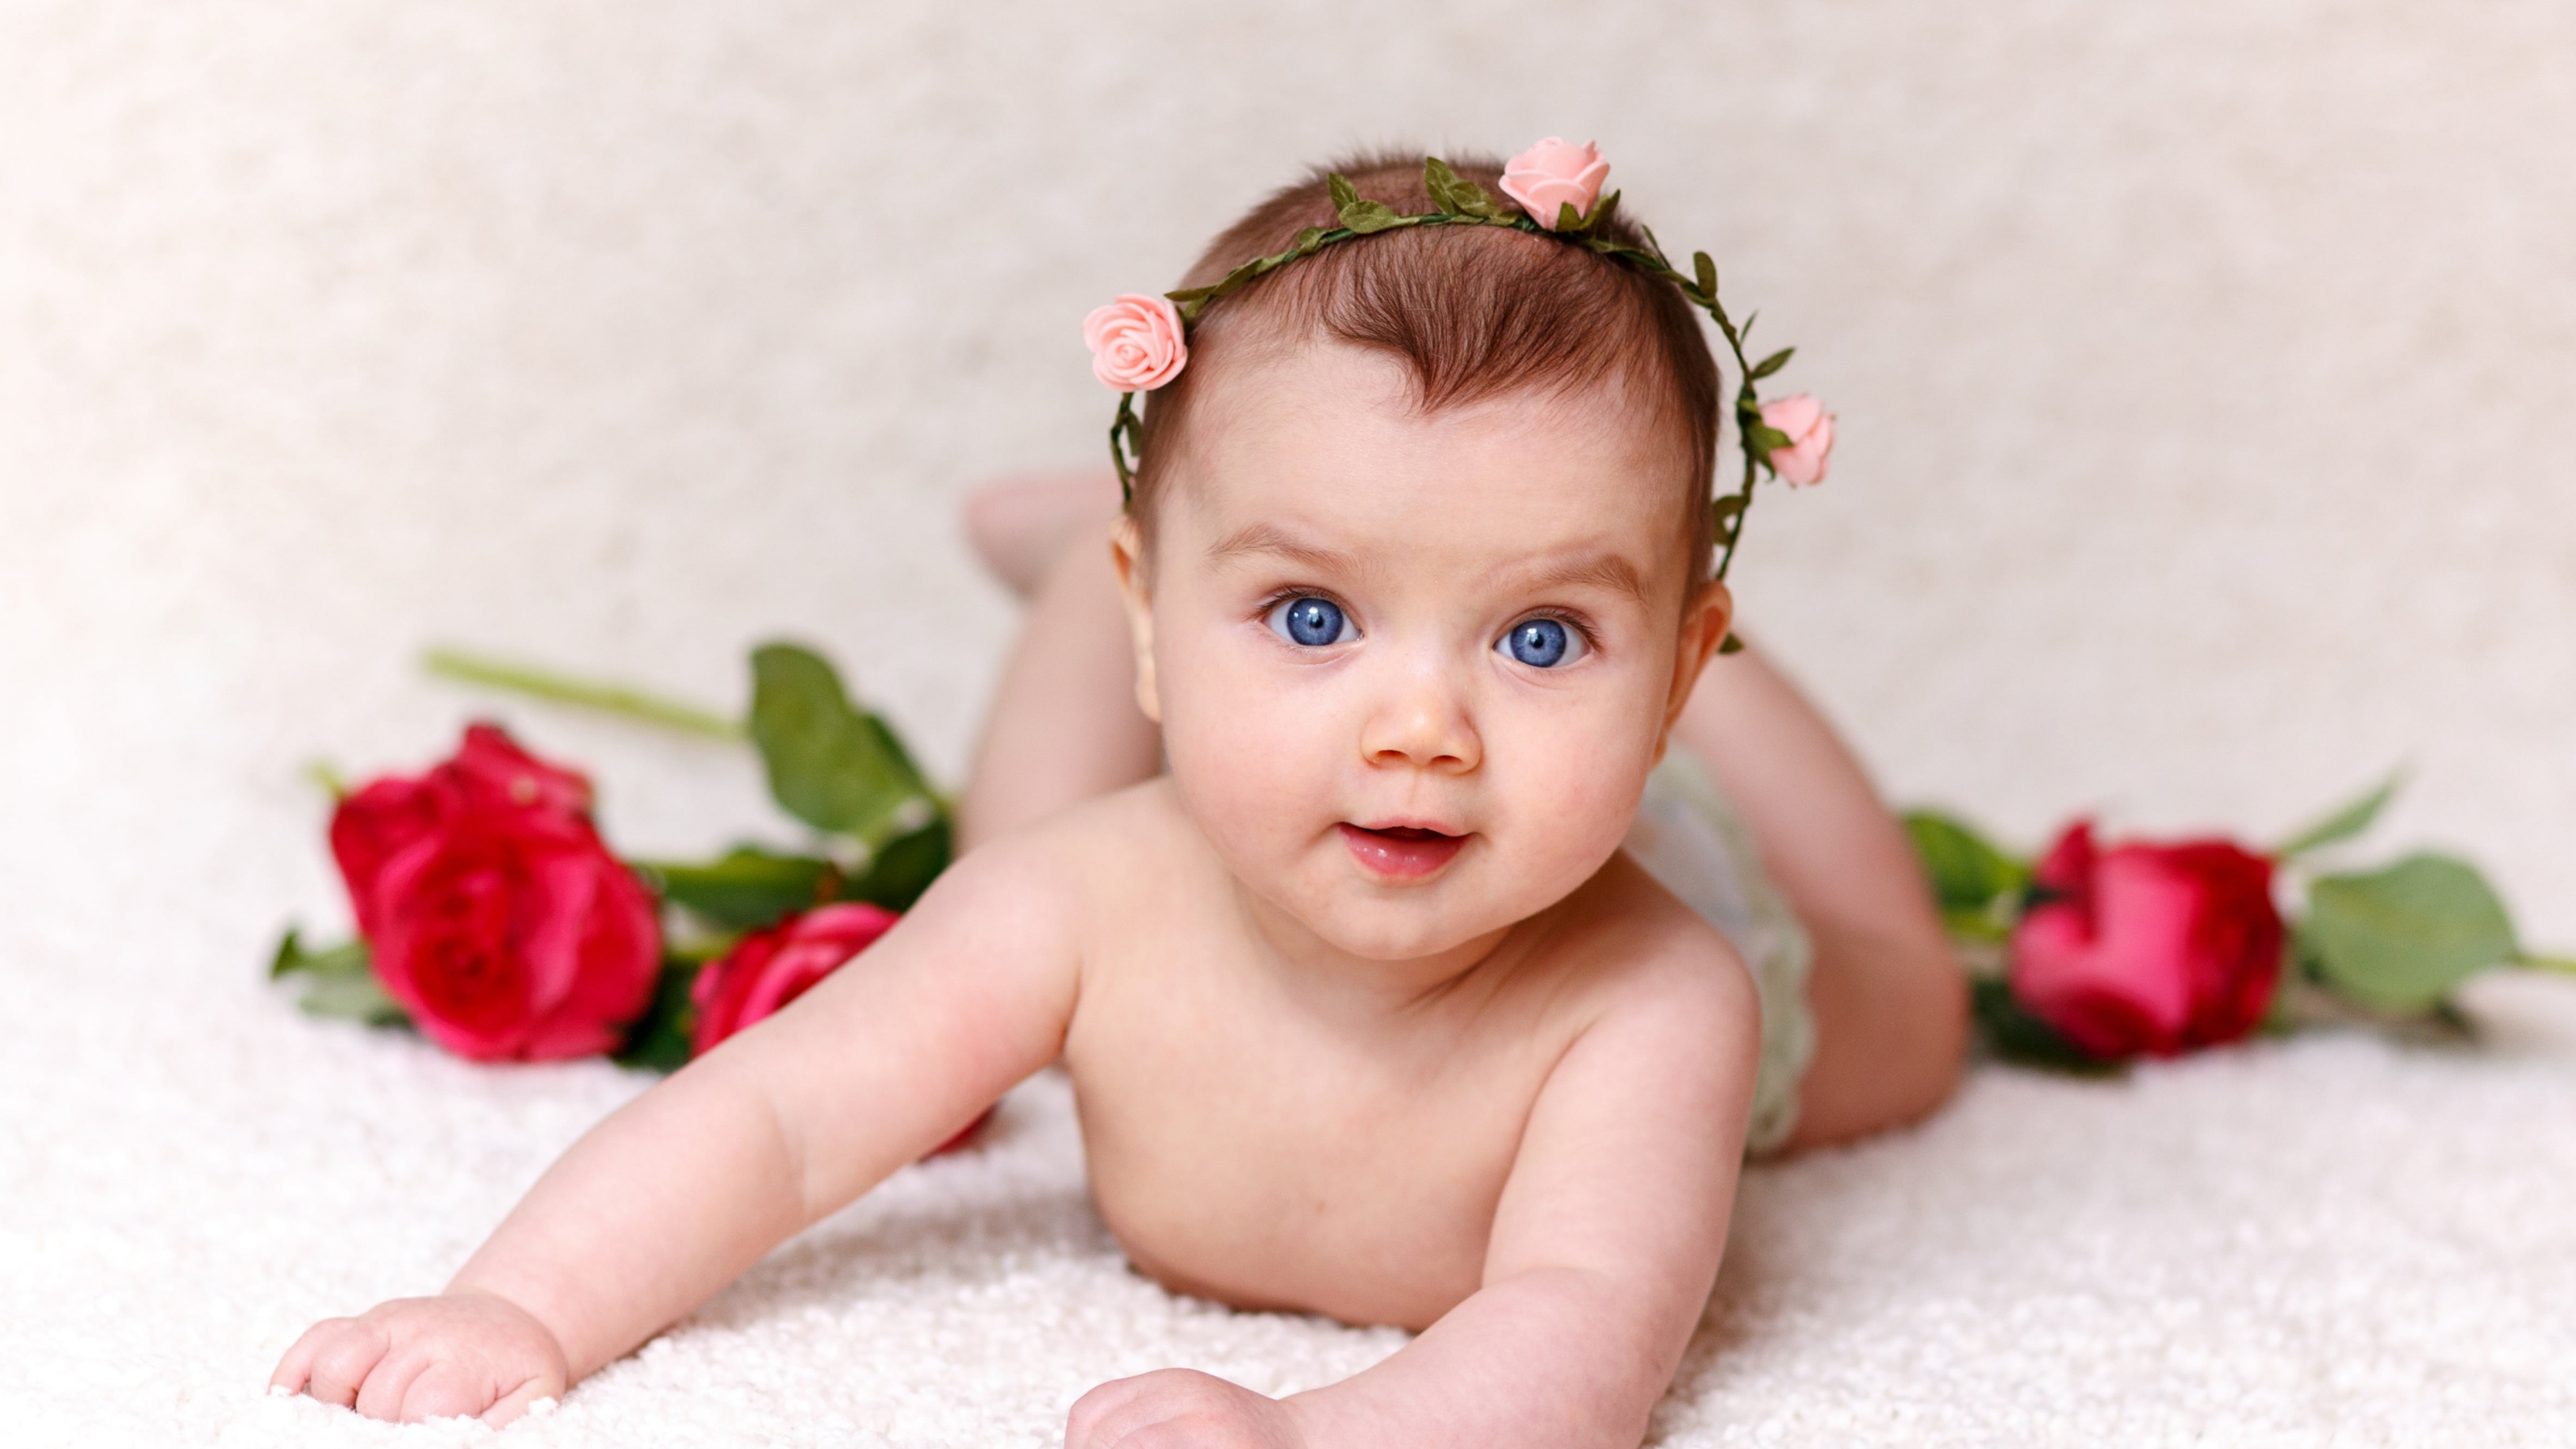 50+] Cute Baby Photos Wallpapers - WallpaperSafari